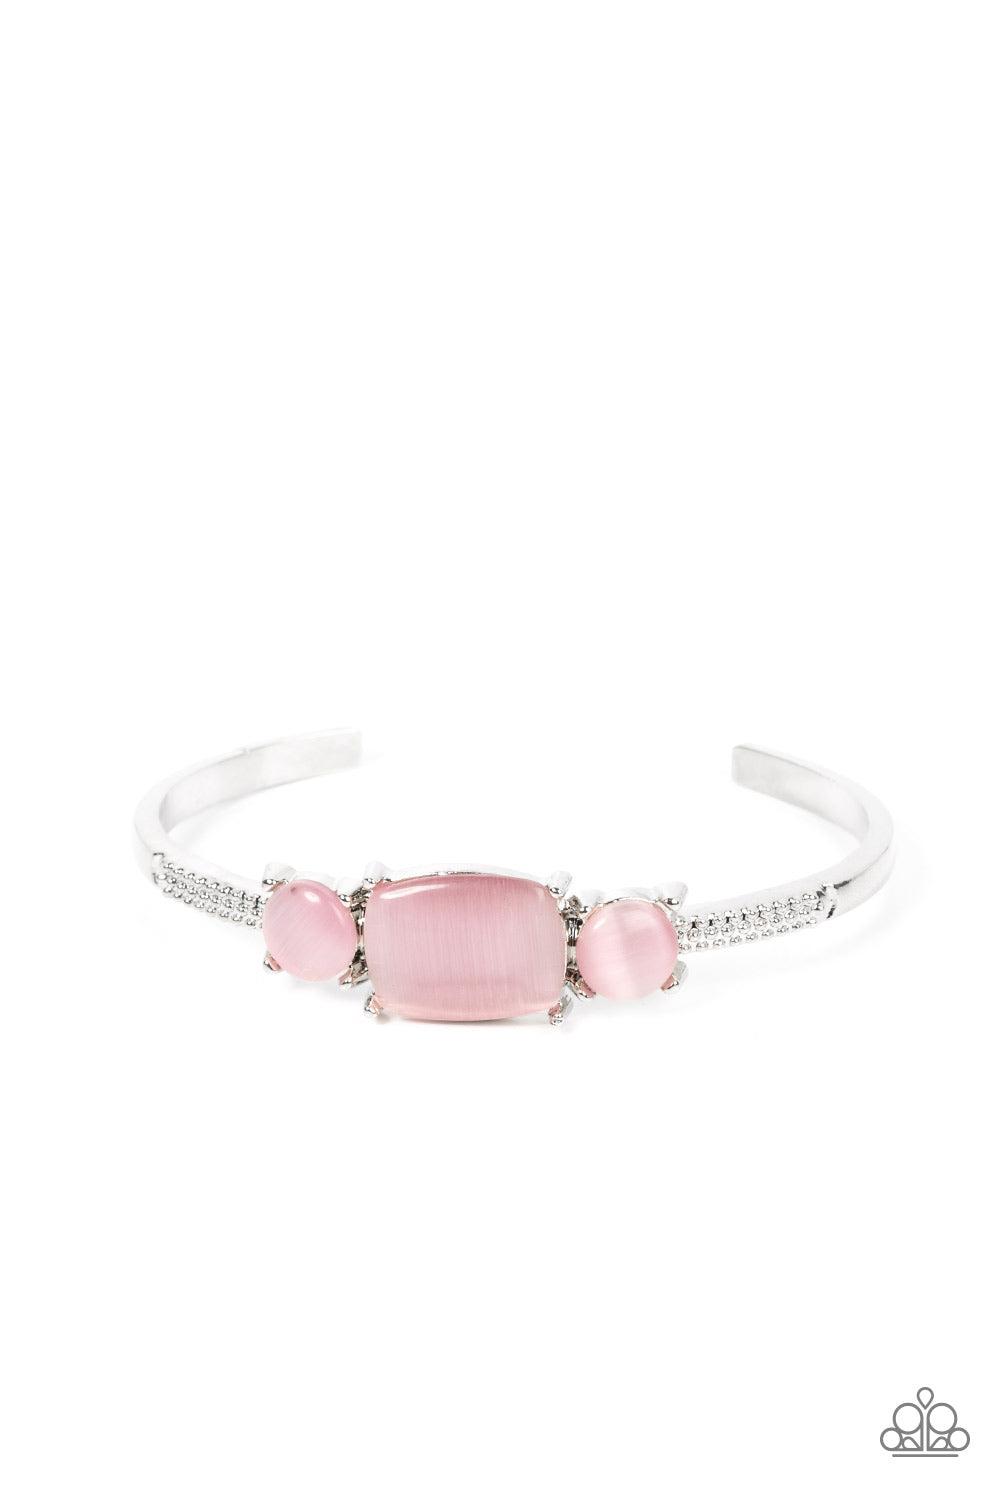 Tranquil Treasure Pink Cat&#39;s Eye Stone Cuff Bracelet - Paparazzi Accessories- lightbox - CarasShop.com - $5 Jewelry by Cara Jewels